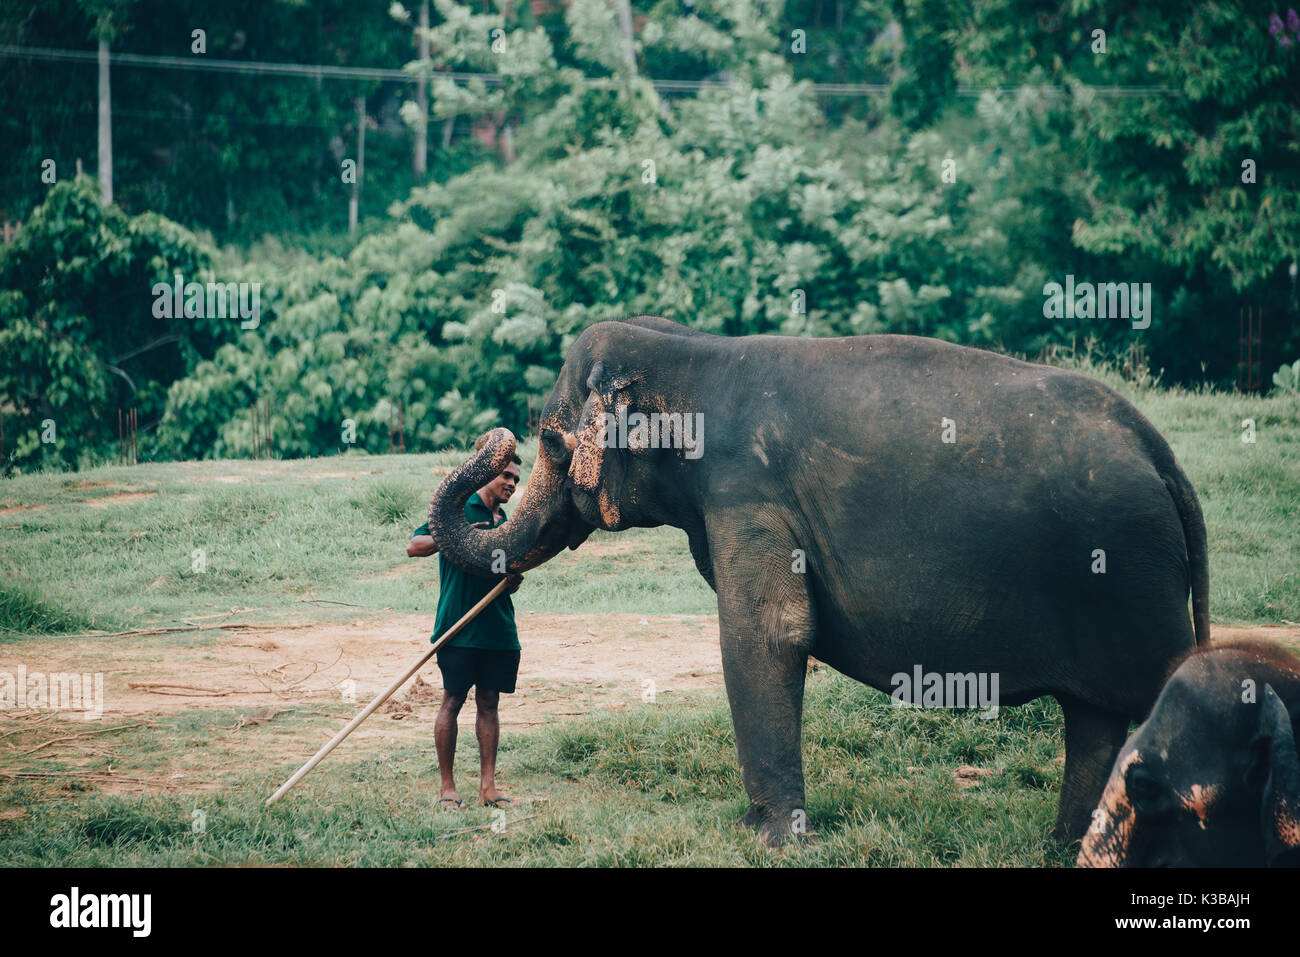 Distrito de Kegalle, Sri Lanka - Abril 18, 2017: Un joven elefante de Sri Lanka con su mahout cerca Kegalle, en la Provincia Central de Sri Lanka. La Sri Lanka Foto de stock